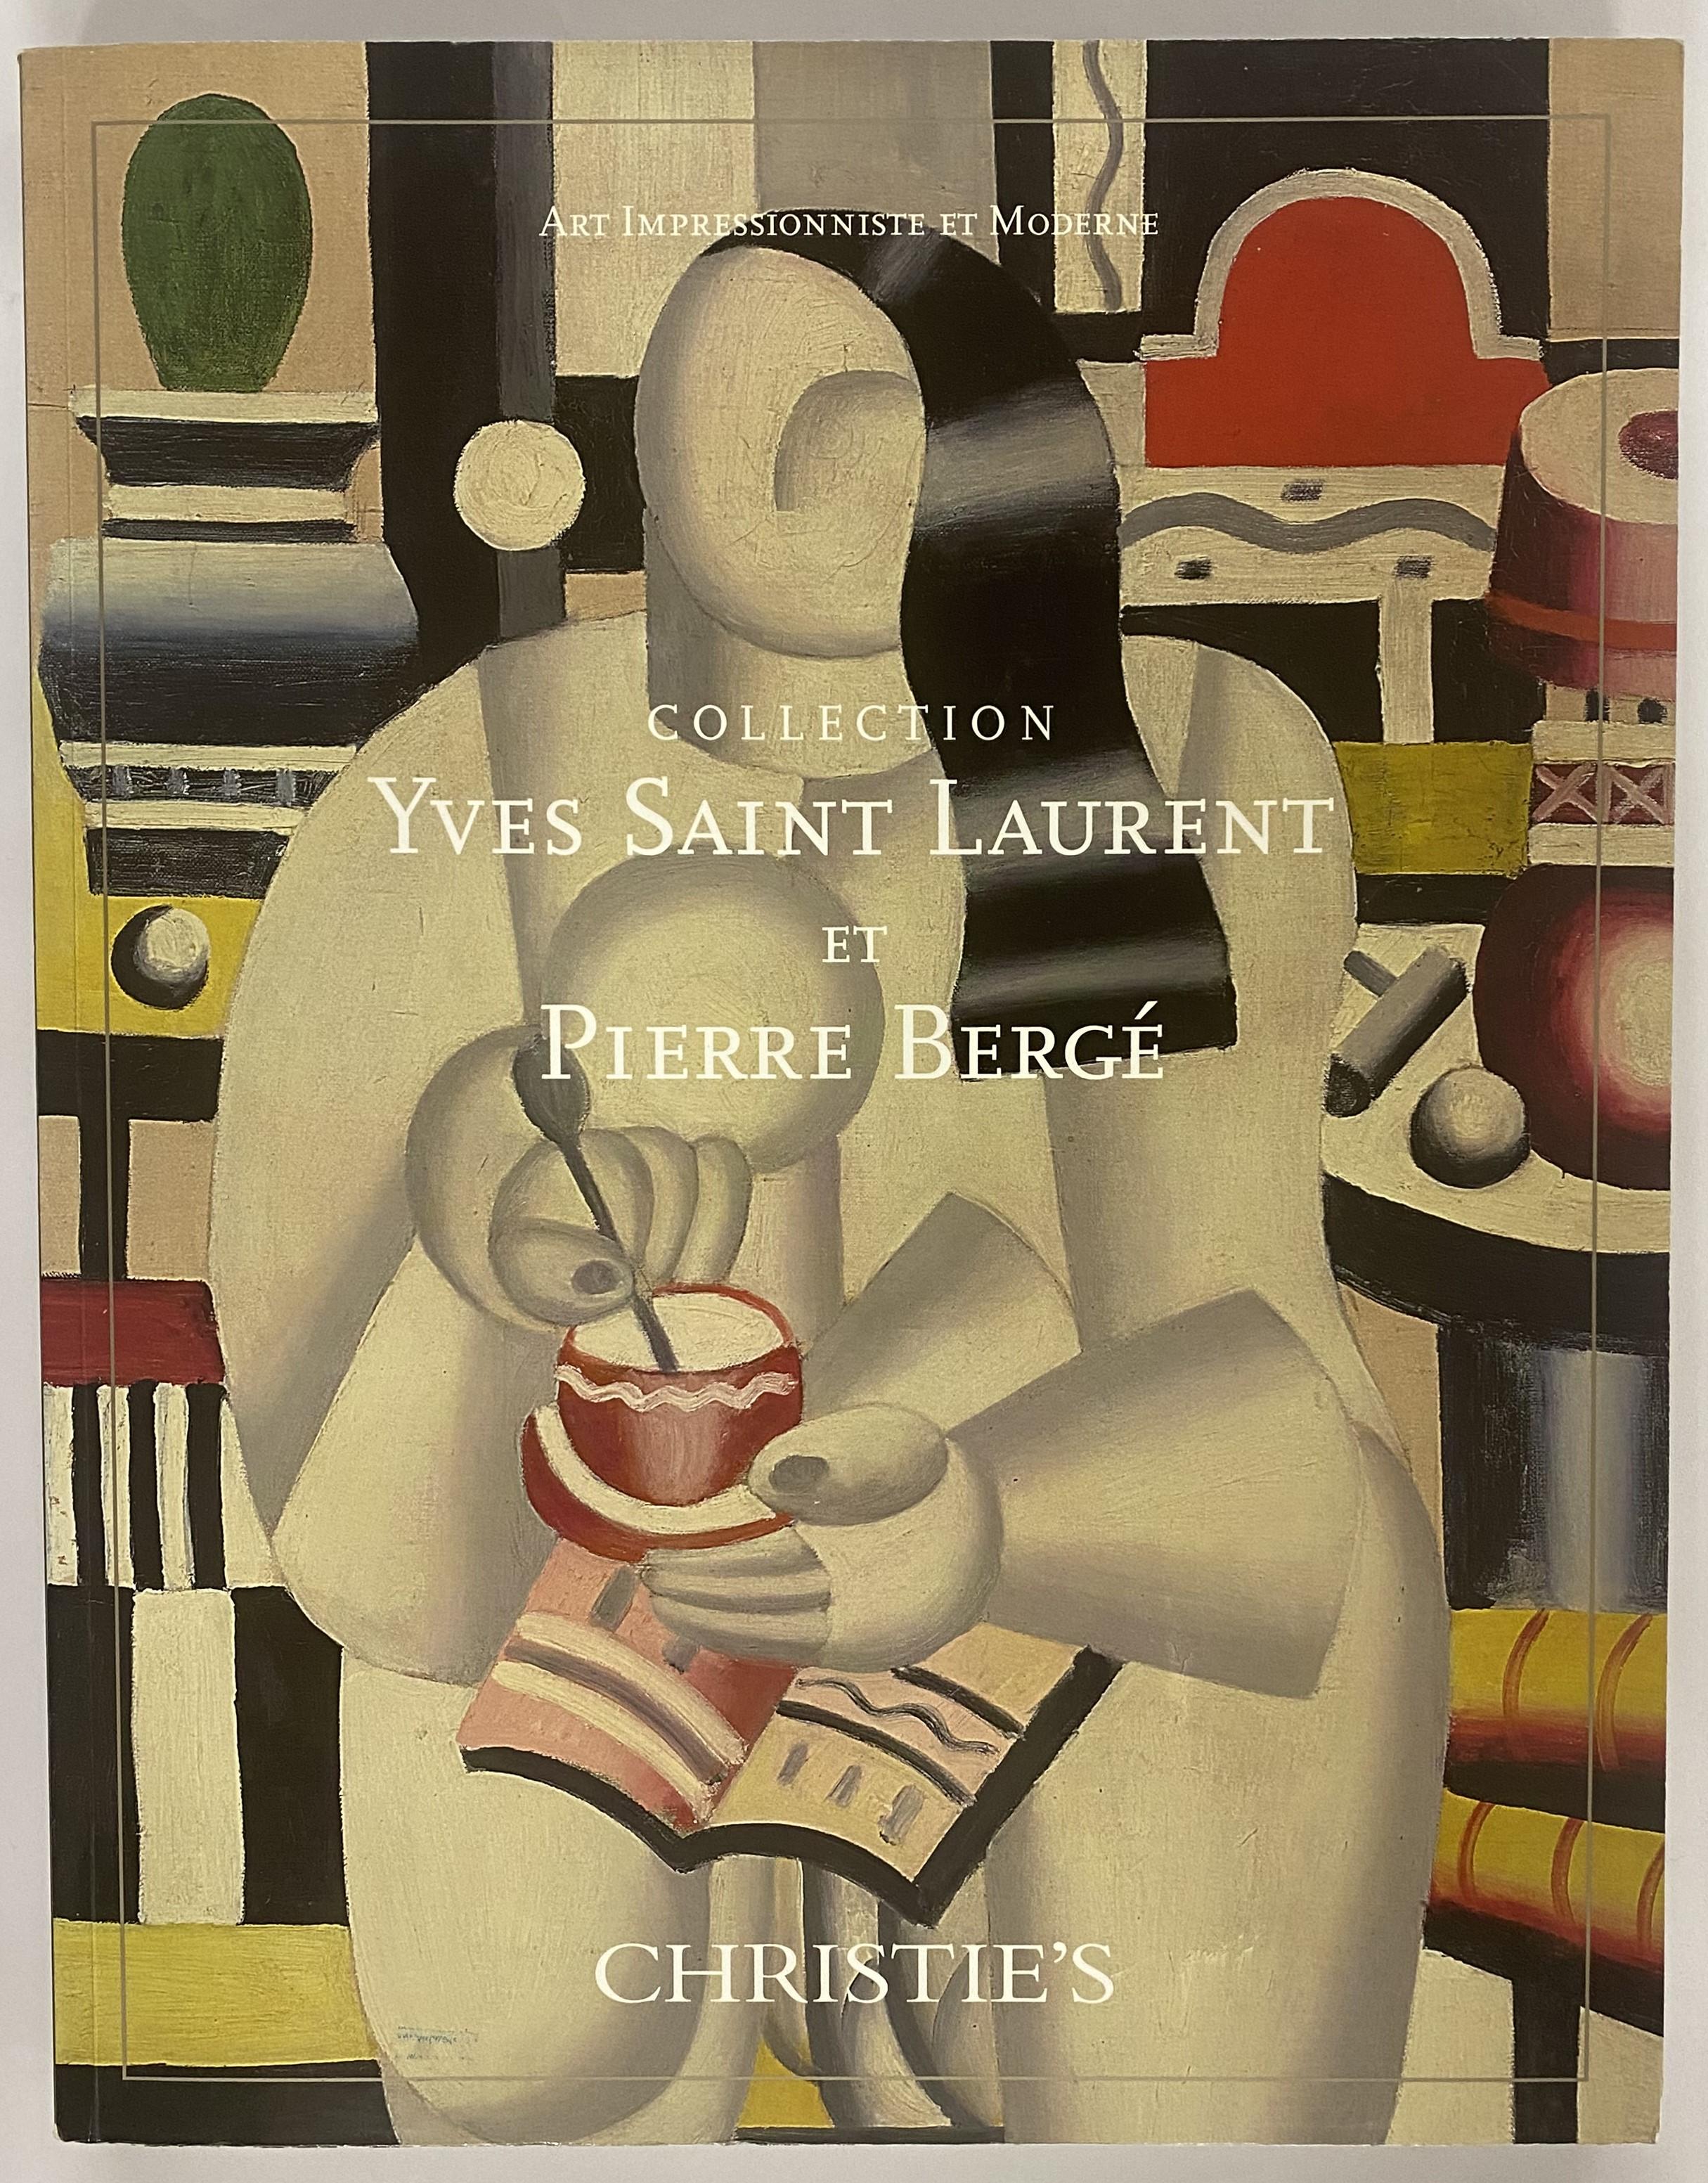 Paper Collection Yves Saint Laurent et Pierre Berge (Book) For Sale